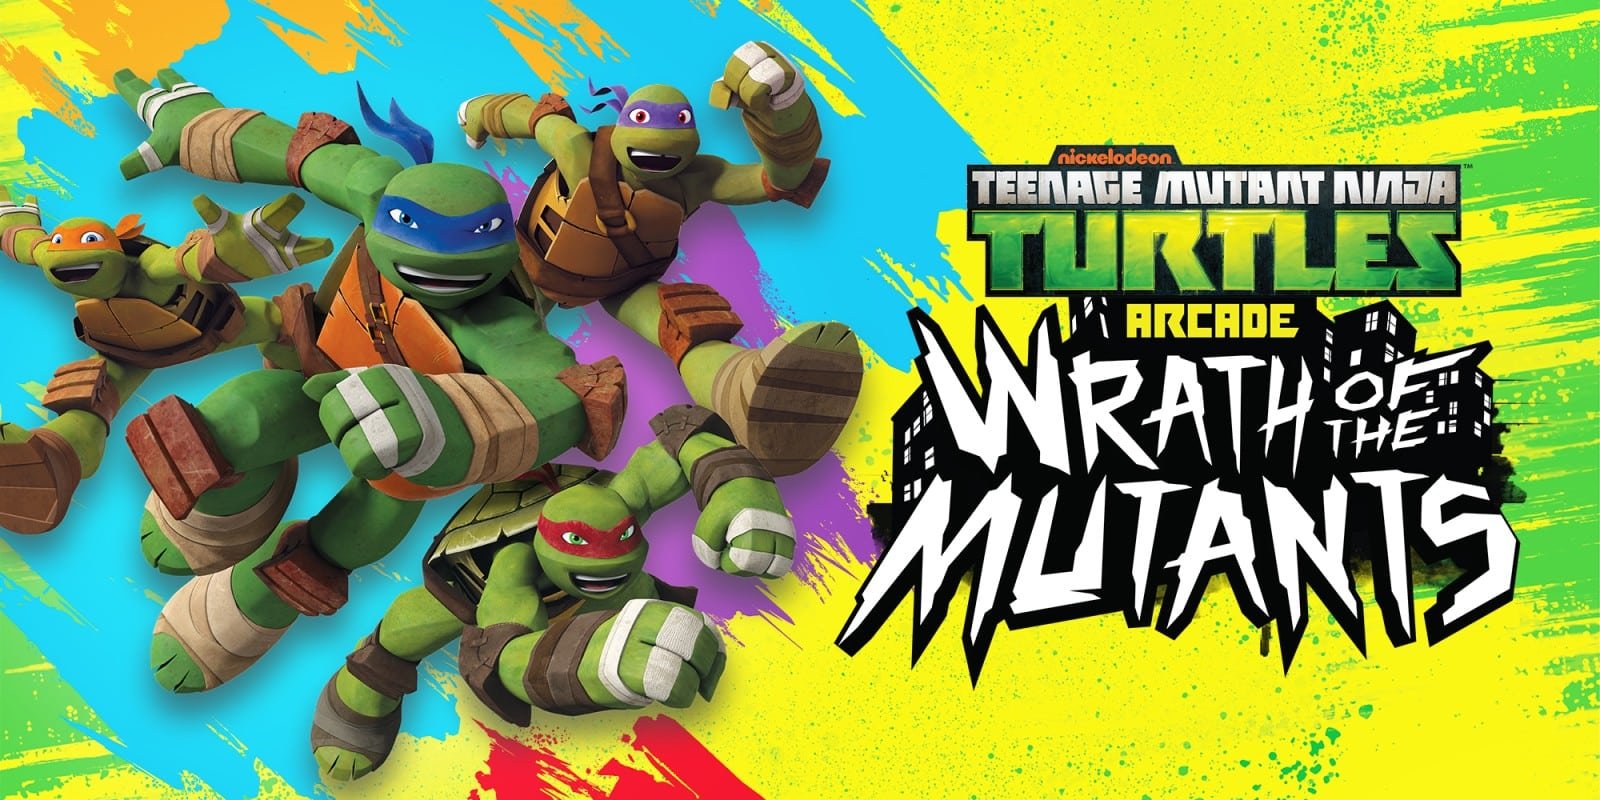 Teenage Mutant Ninja Turtles Arcade: Wrath of the Mutants : les célèbres tortues disponibles aujourd’hui sur Nintendo Switch